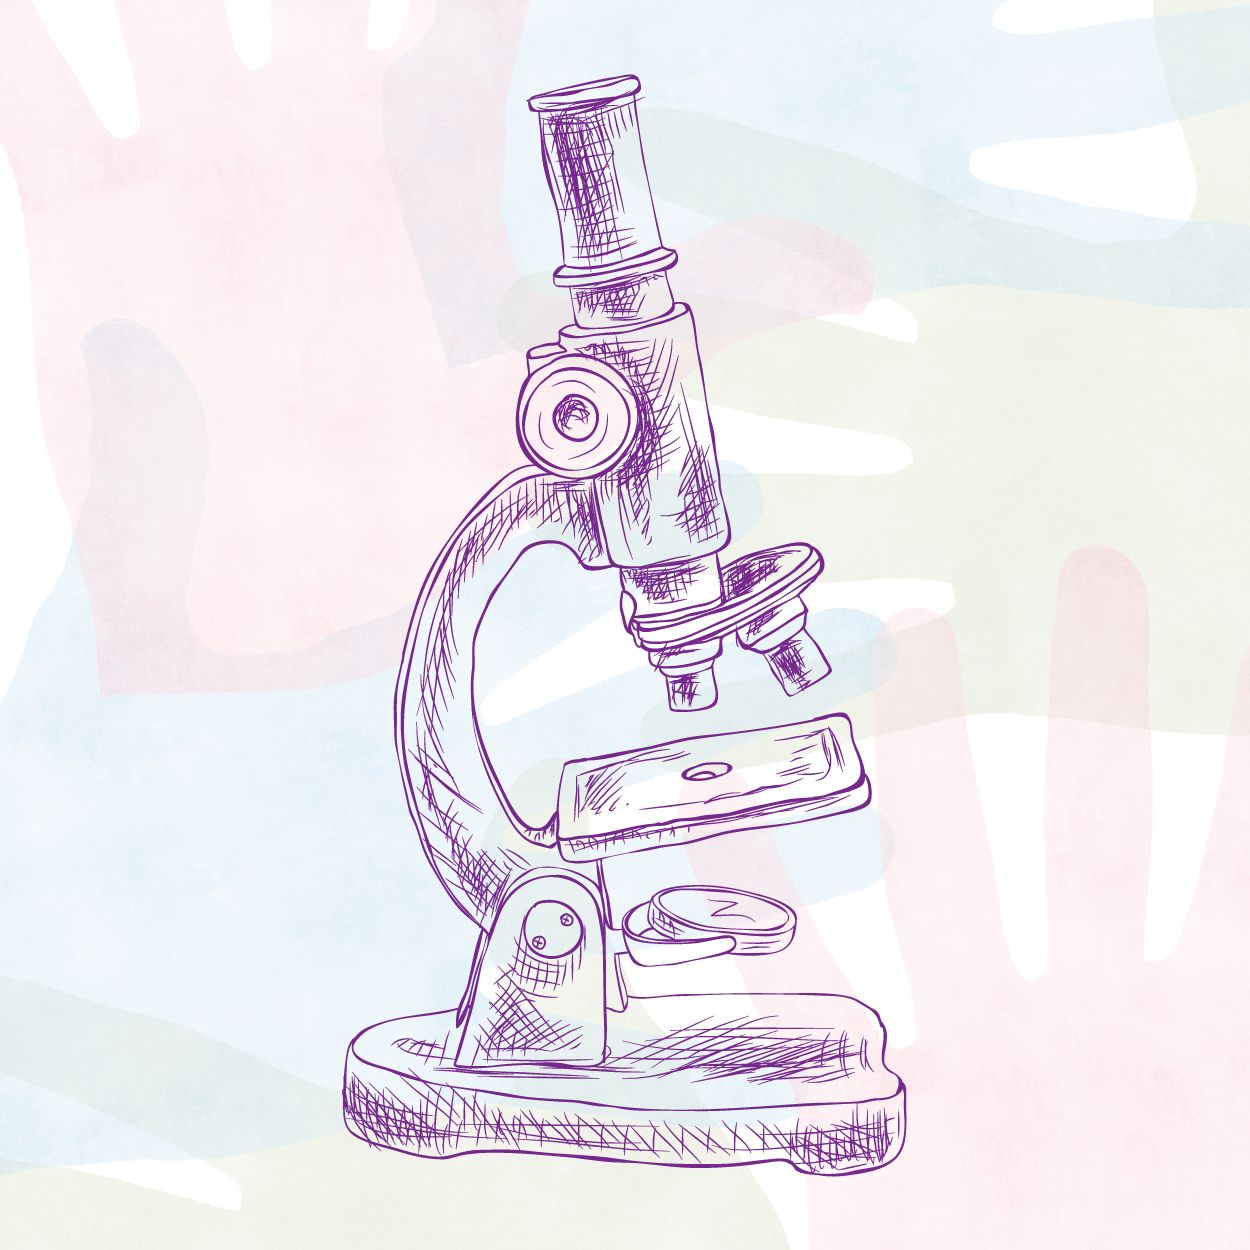 Imagen de recurso para investigación: ilustración de un microscopio.